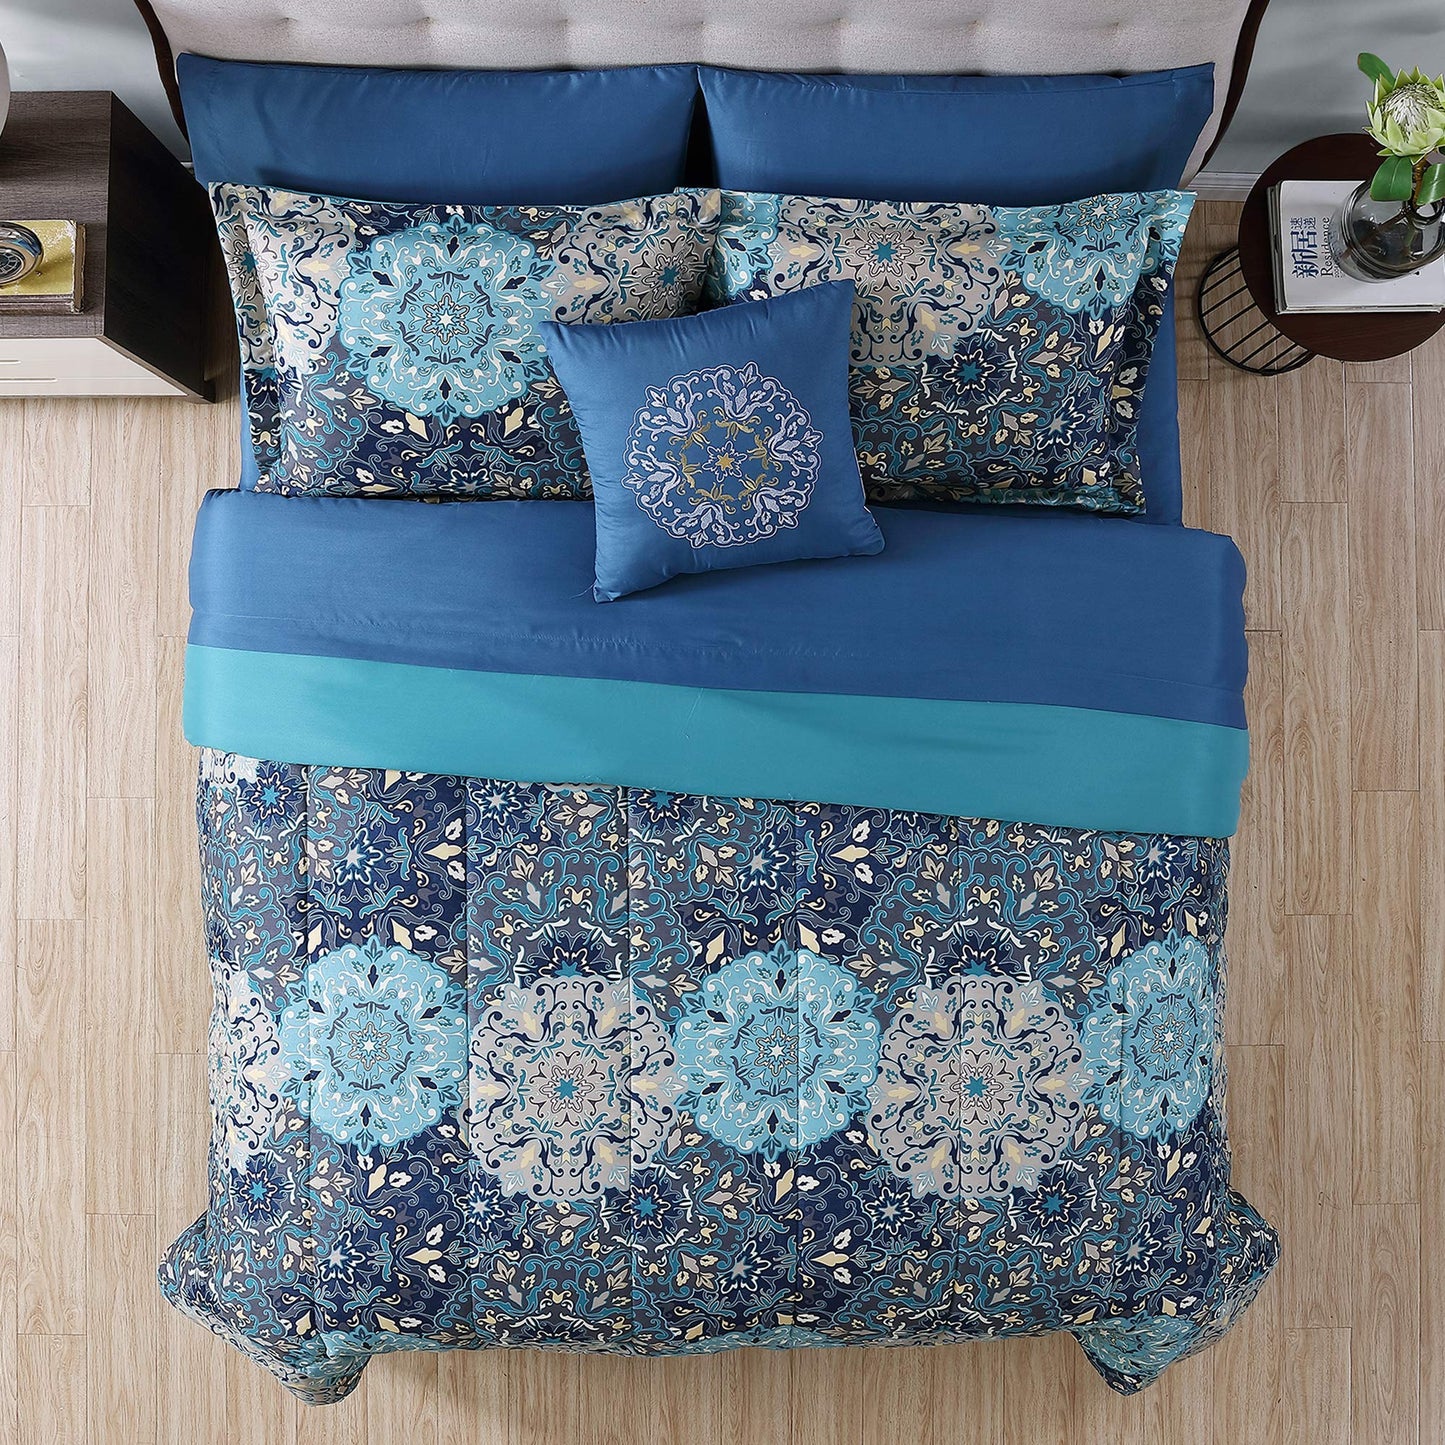 Modern Threads - Granada Collection Comforter Set - Reversible Microfiber - Elegant Printed Bed Set - Includes Comforter, Sheets, Shams, & Pillow - Luxurious Bedding